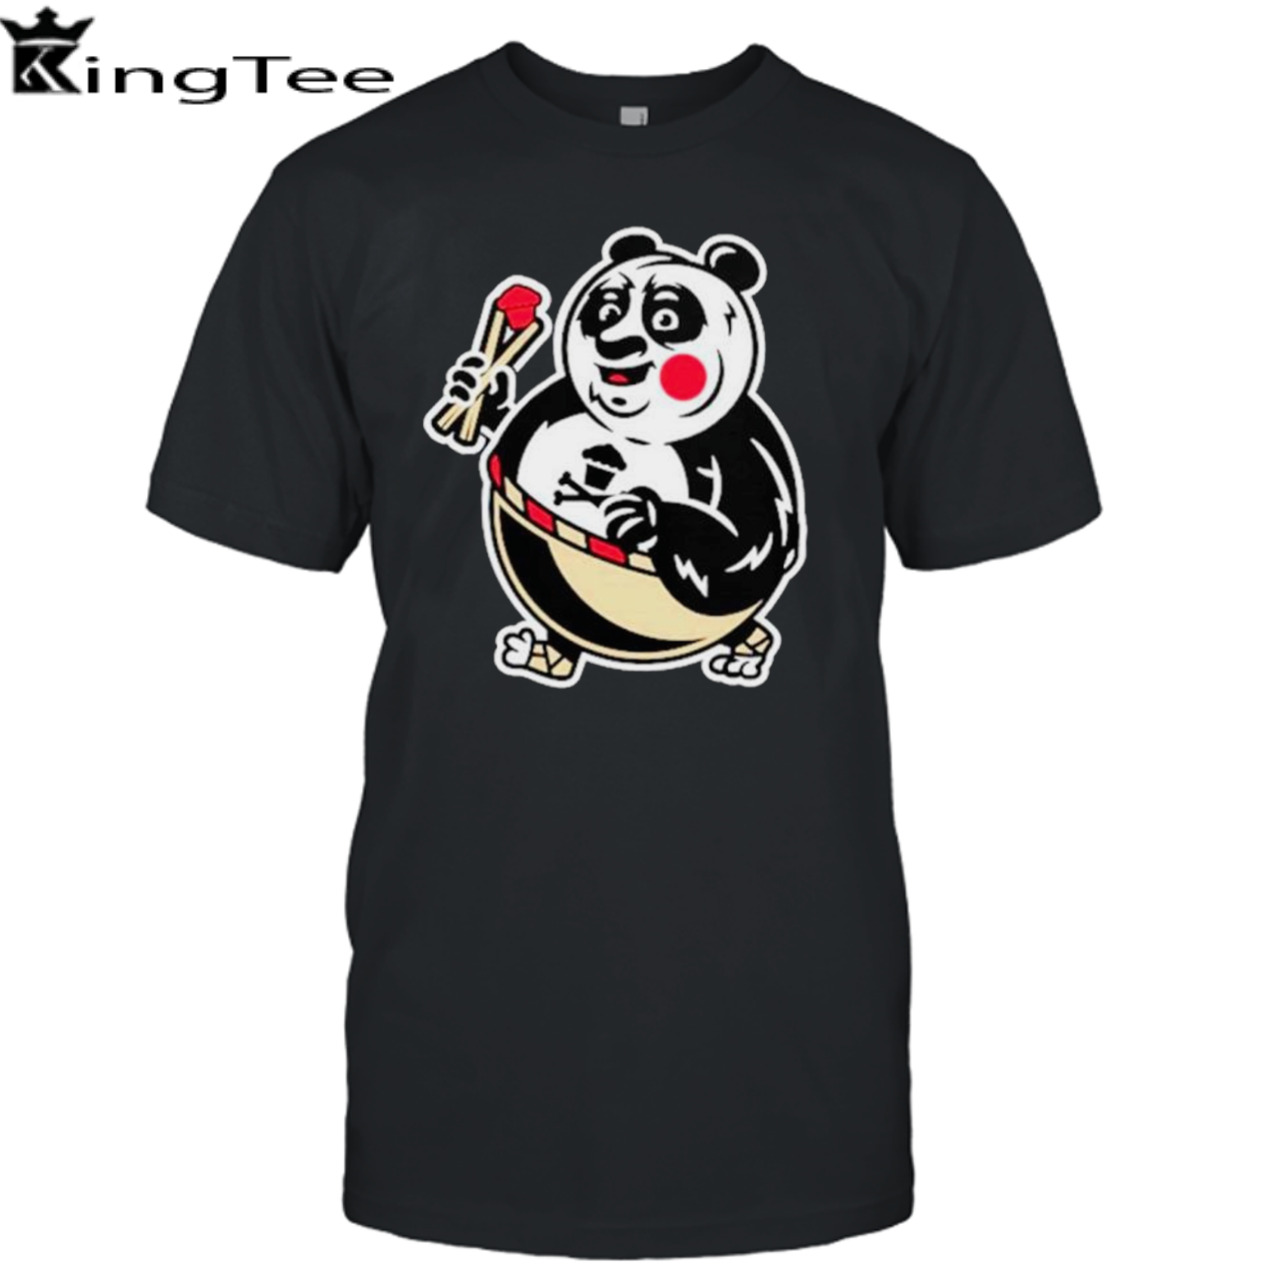 Fighting panda funny shirt